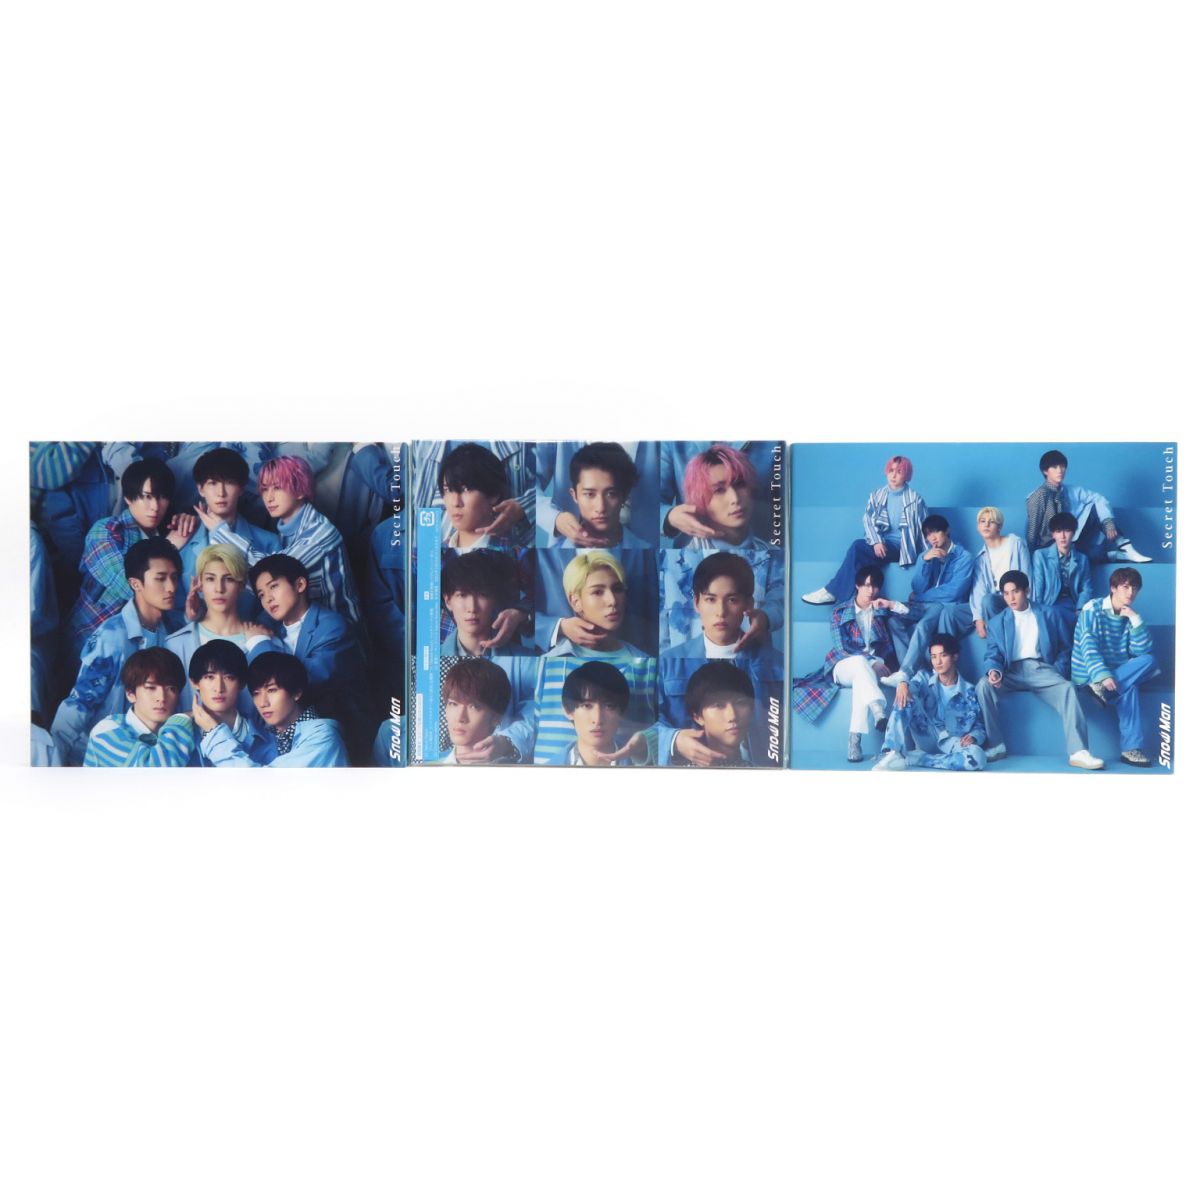 CD DVD / CD Snow Man Secret Touch 初回盤A / 初回盤B / 通常盤(初回仕様) セット ※中古